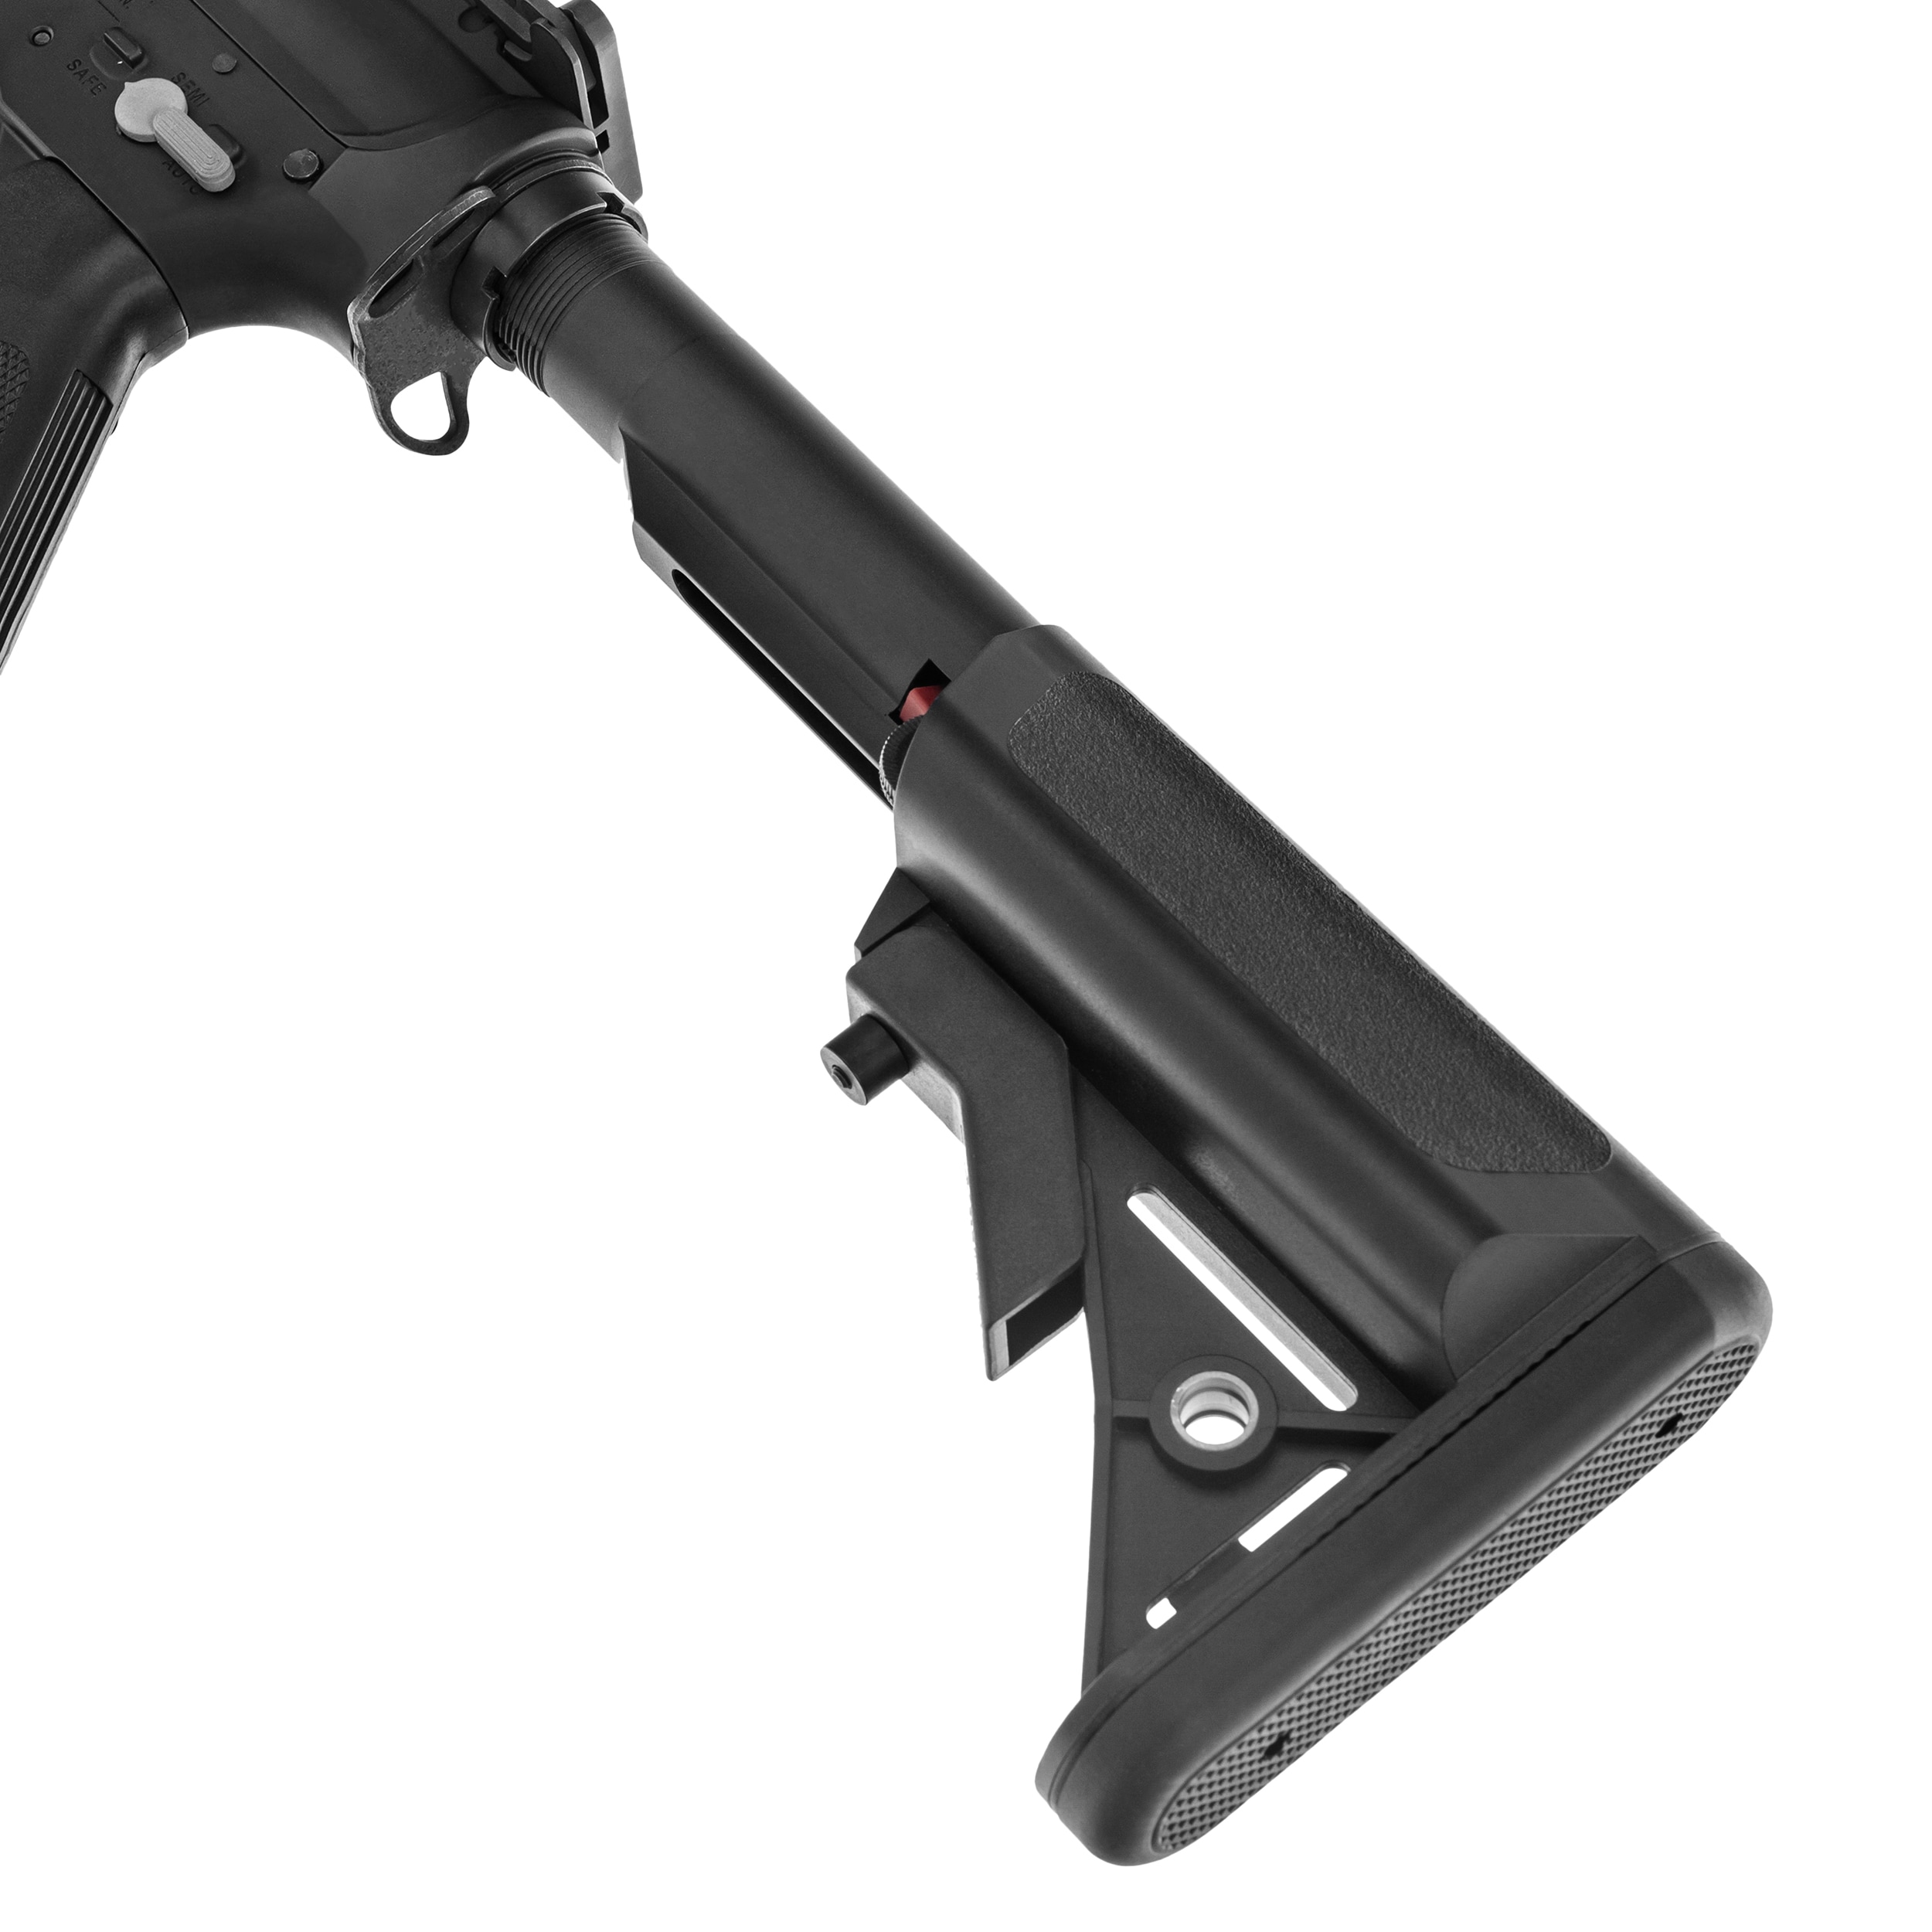 Штурмова гвинтівка AEG Cybergun Colt MK18 MOD I - Dark Earth